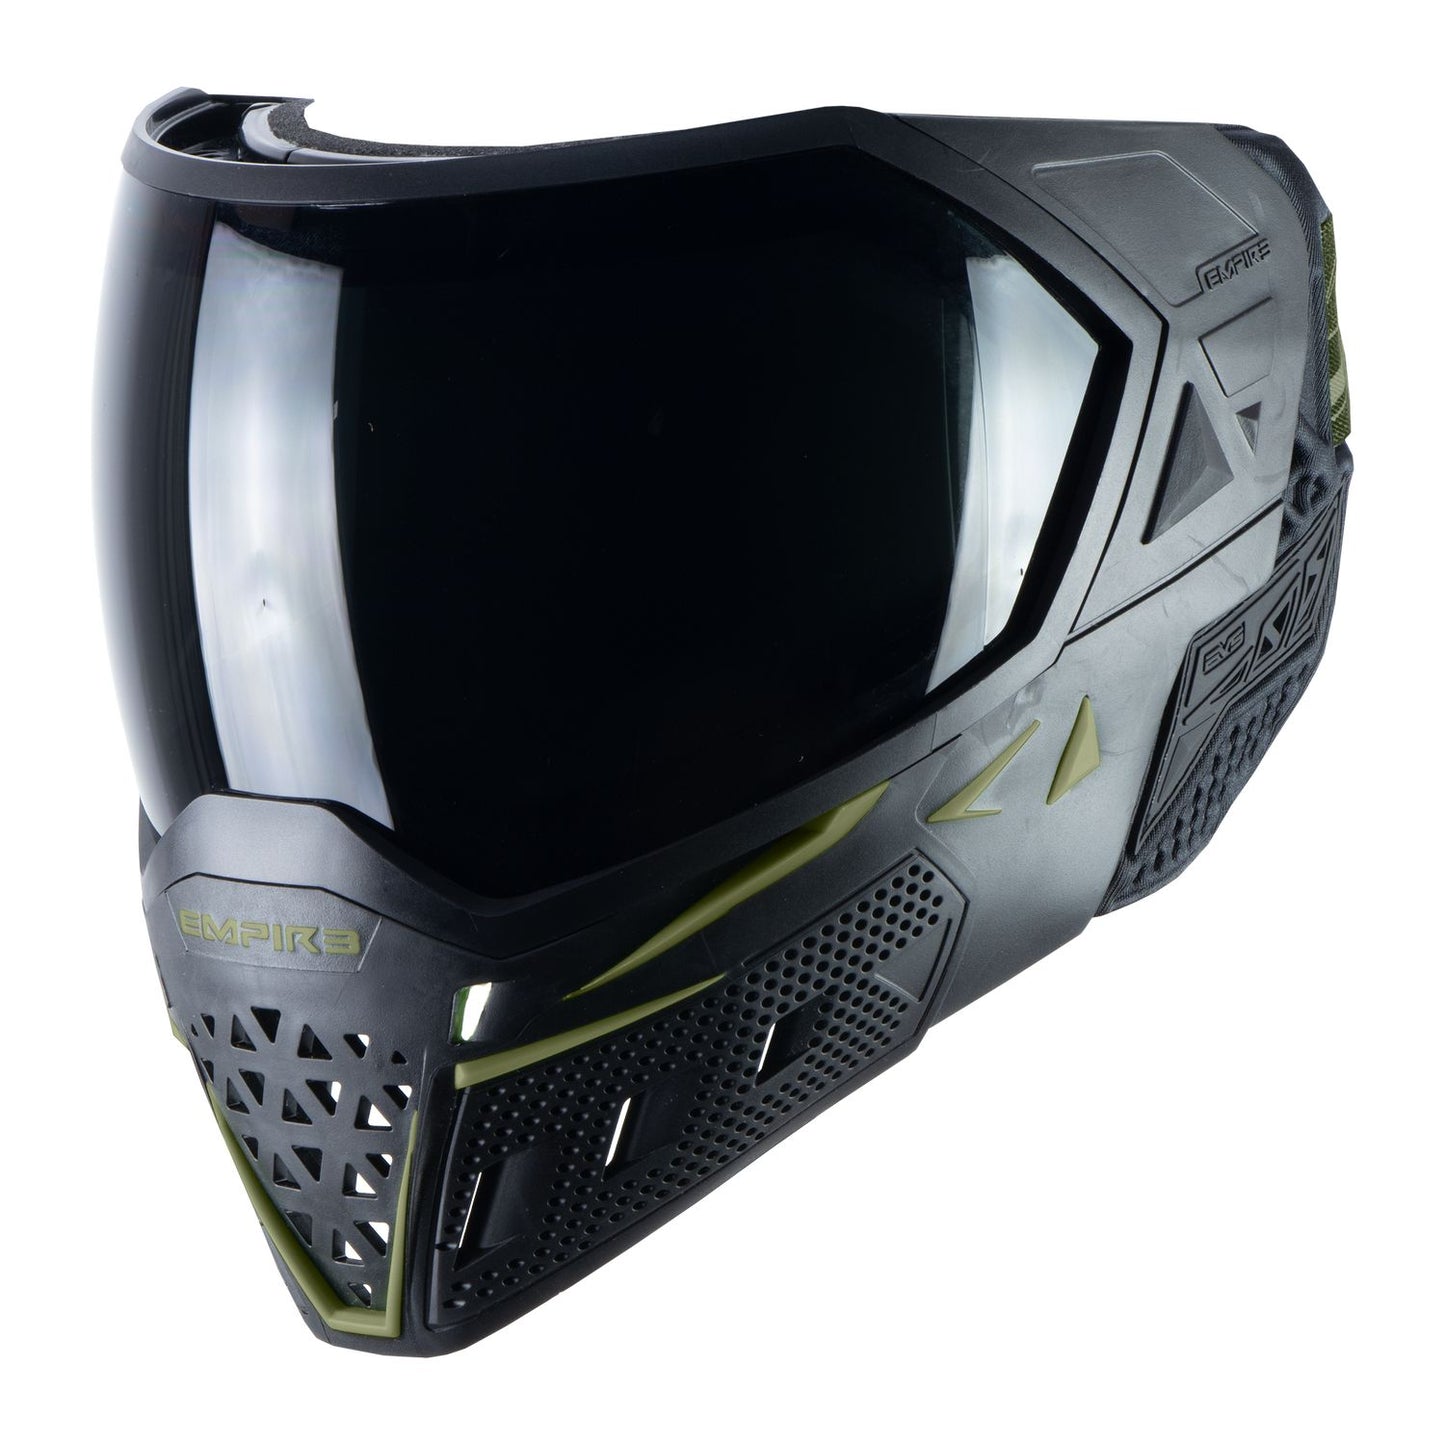 Empire EVS Enhanced Vision System Goggle - Black/Olive - includes 2 lenses